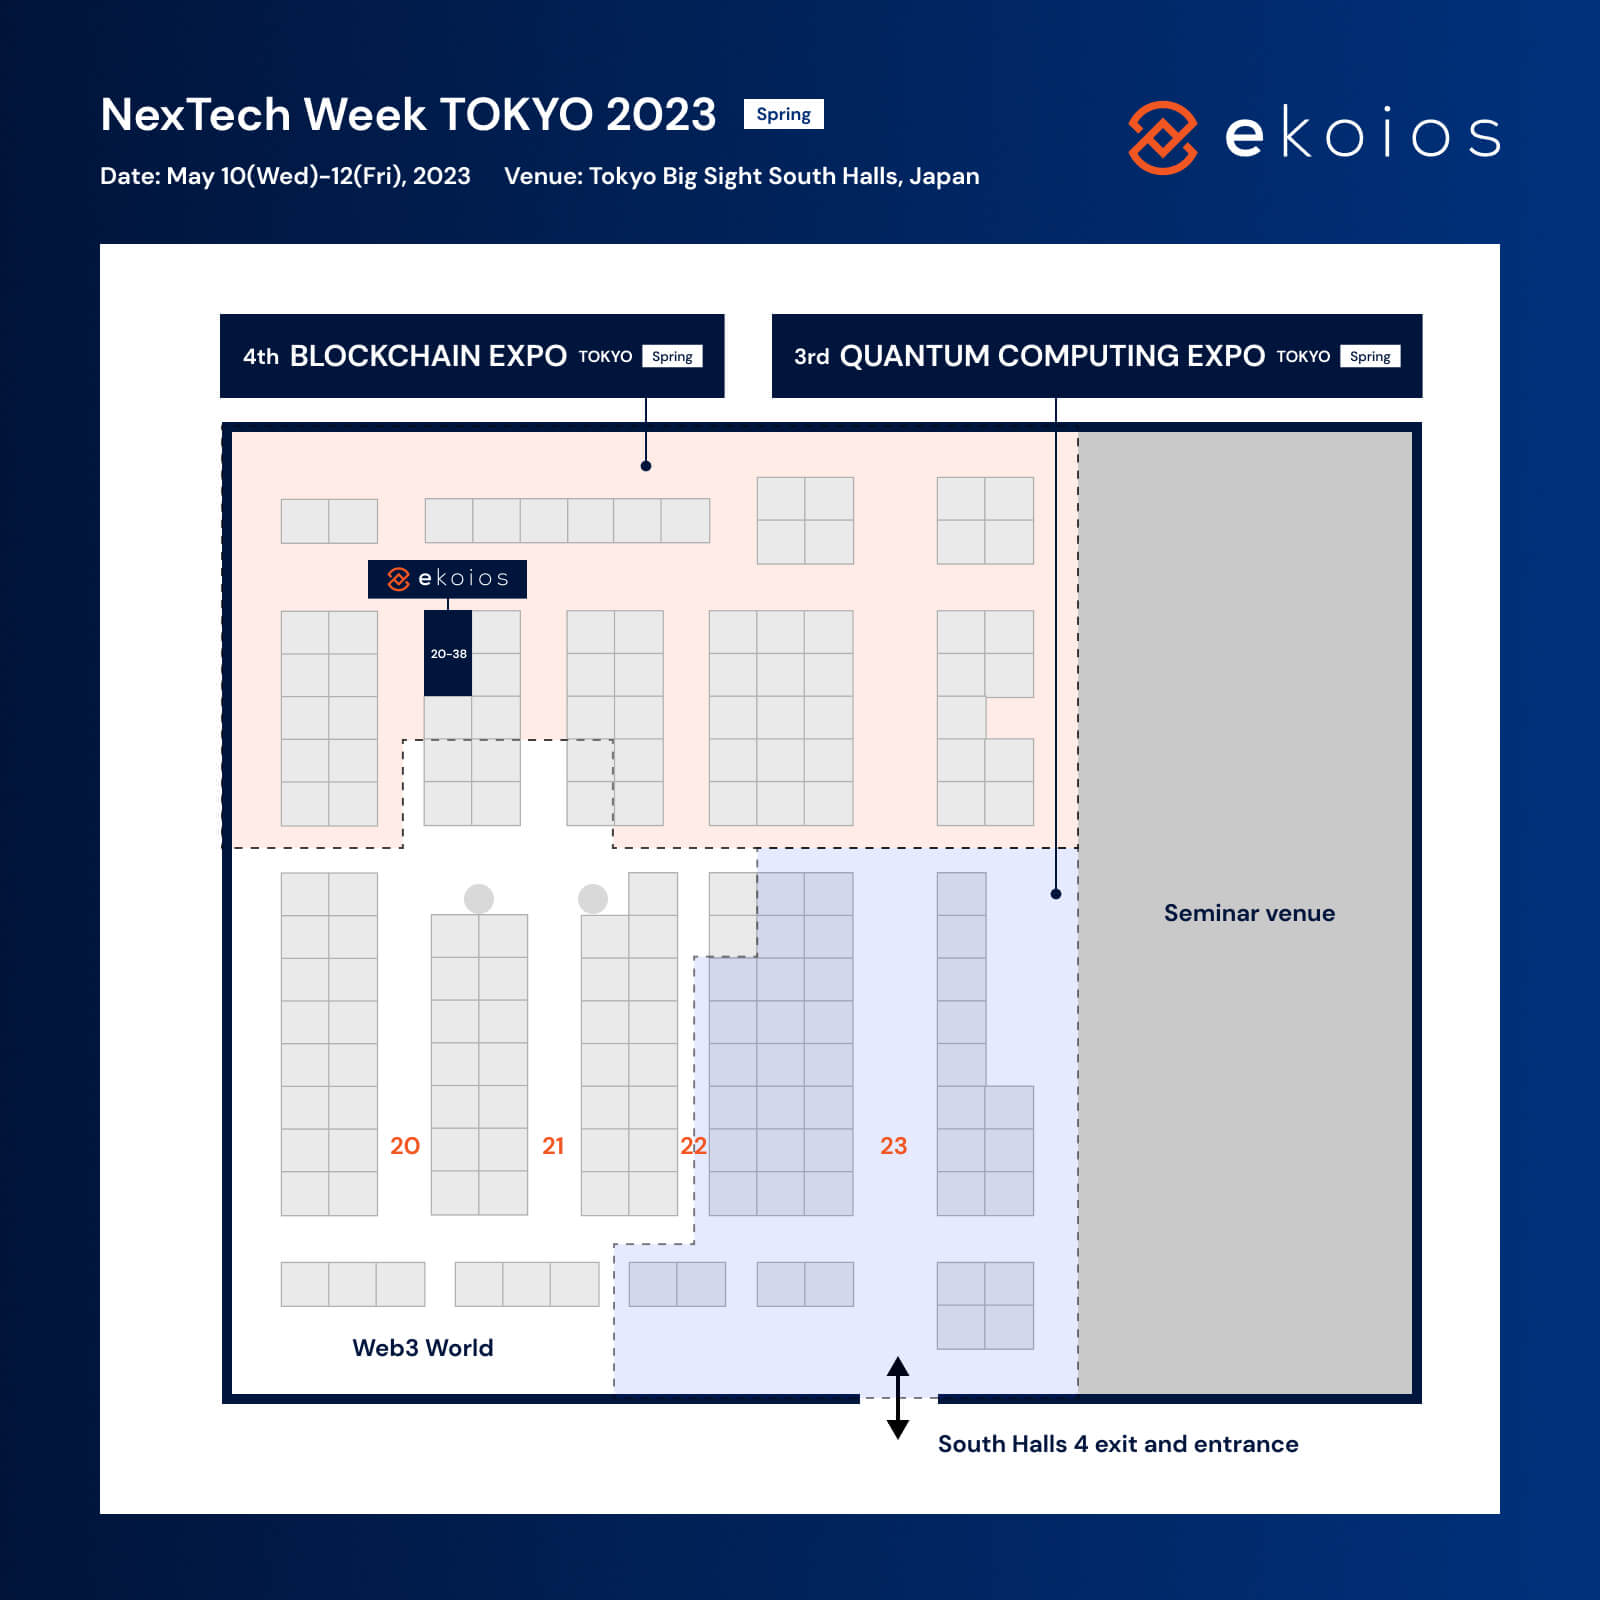 Ekoios's booth location at the Blockchain Expo 2023